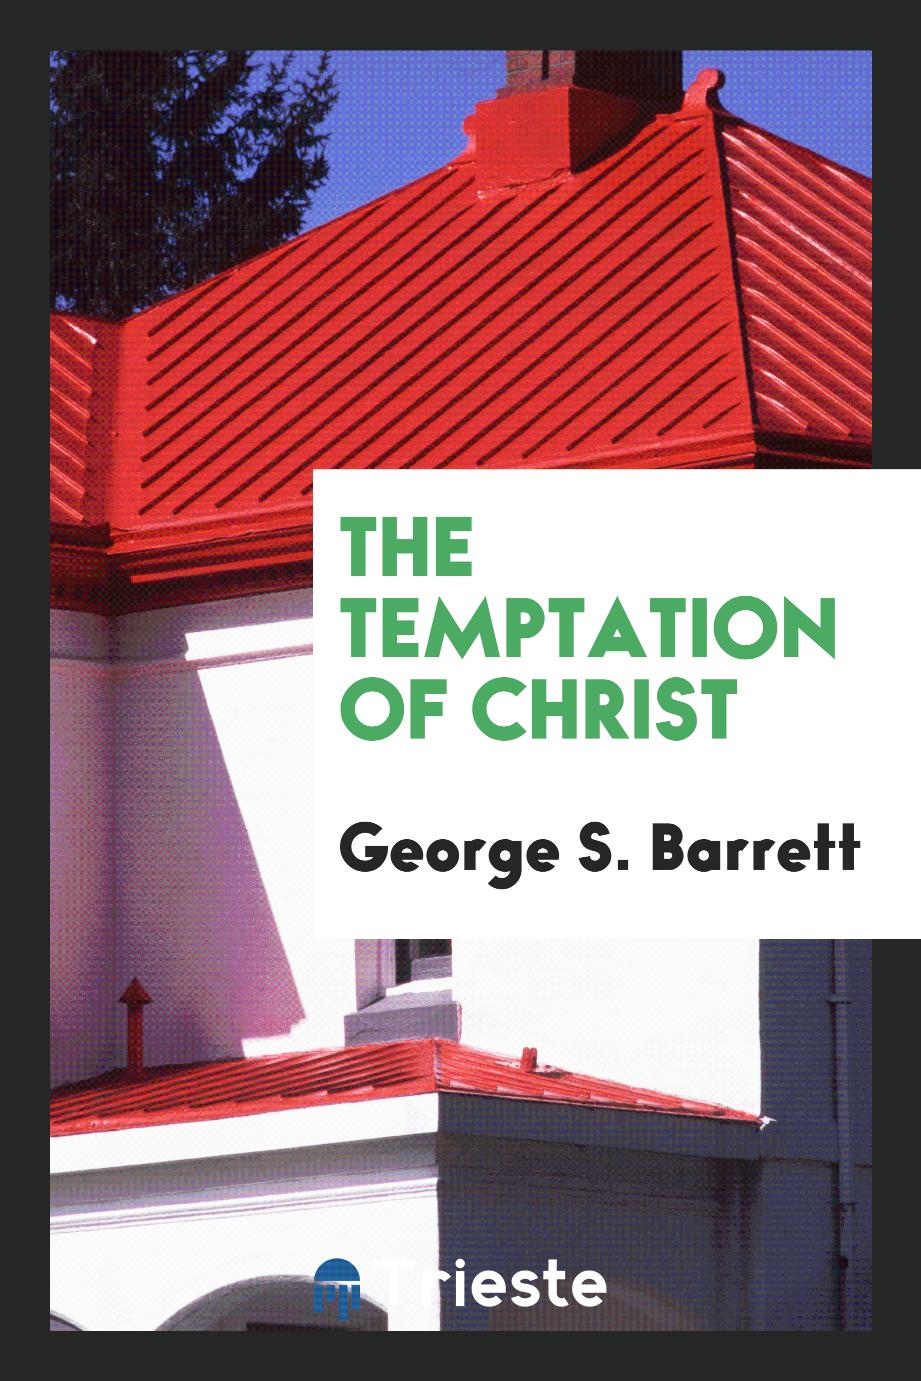 The temptation of Christ